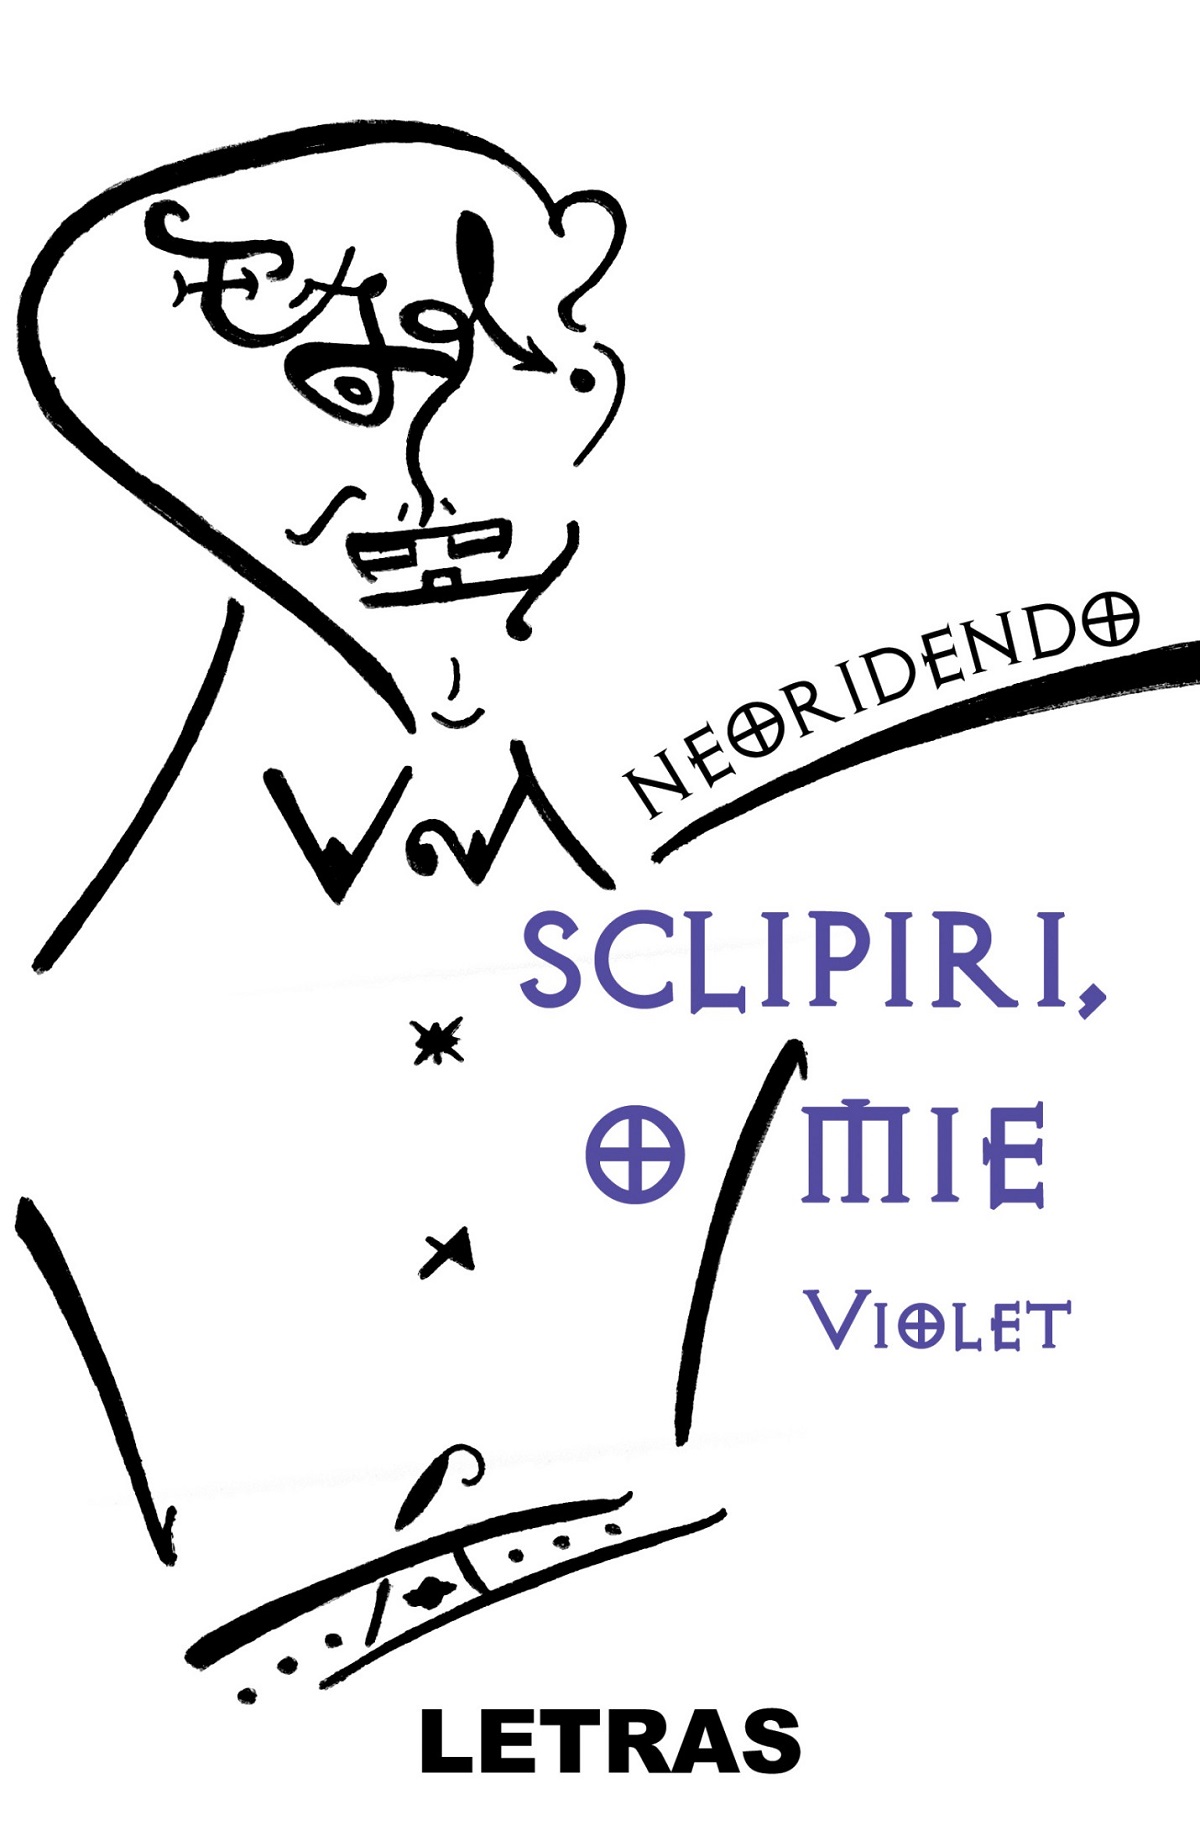 Sclipiri, o mie: Vol.1 Violet - Neoridendo